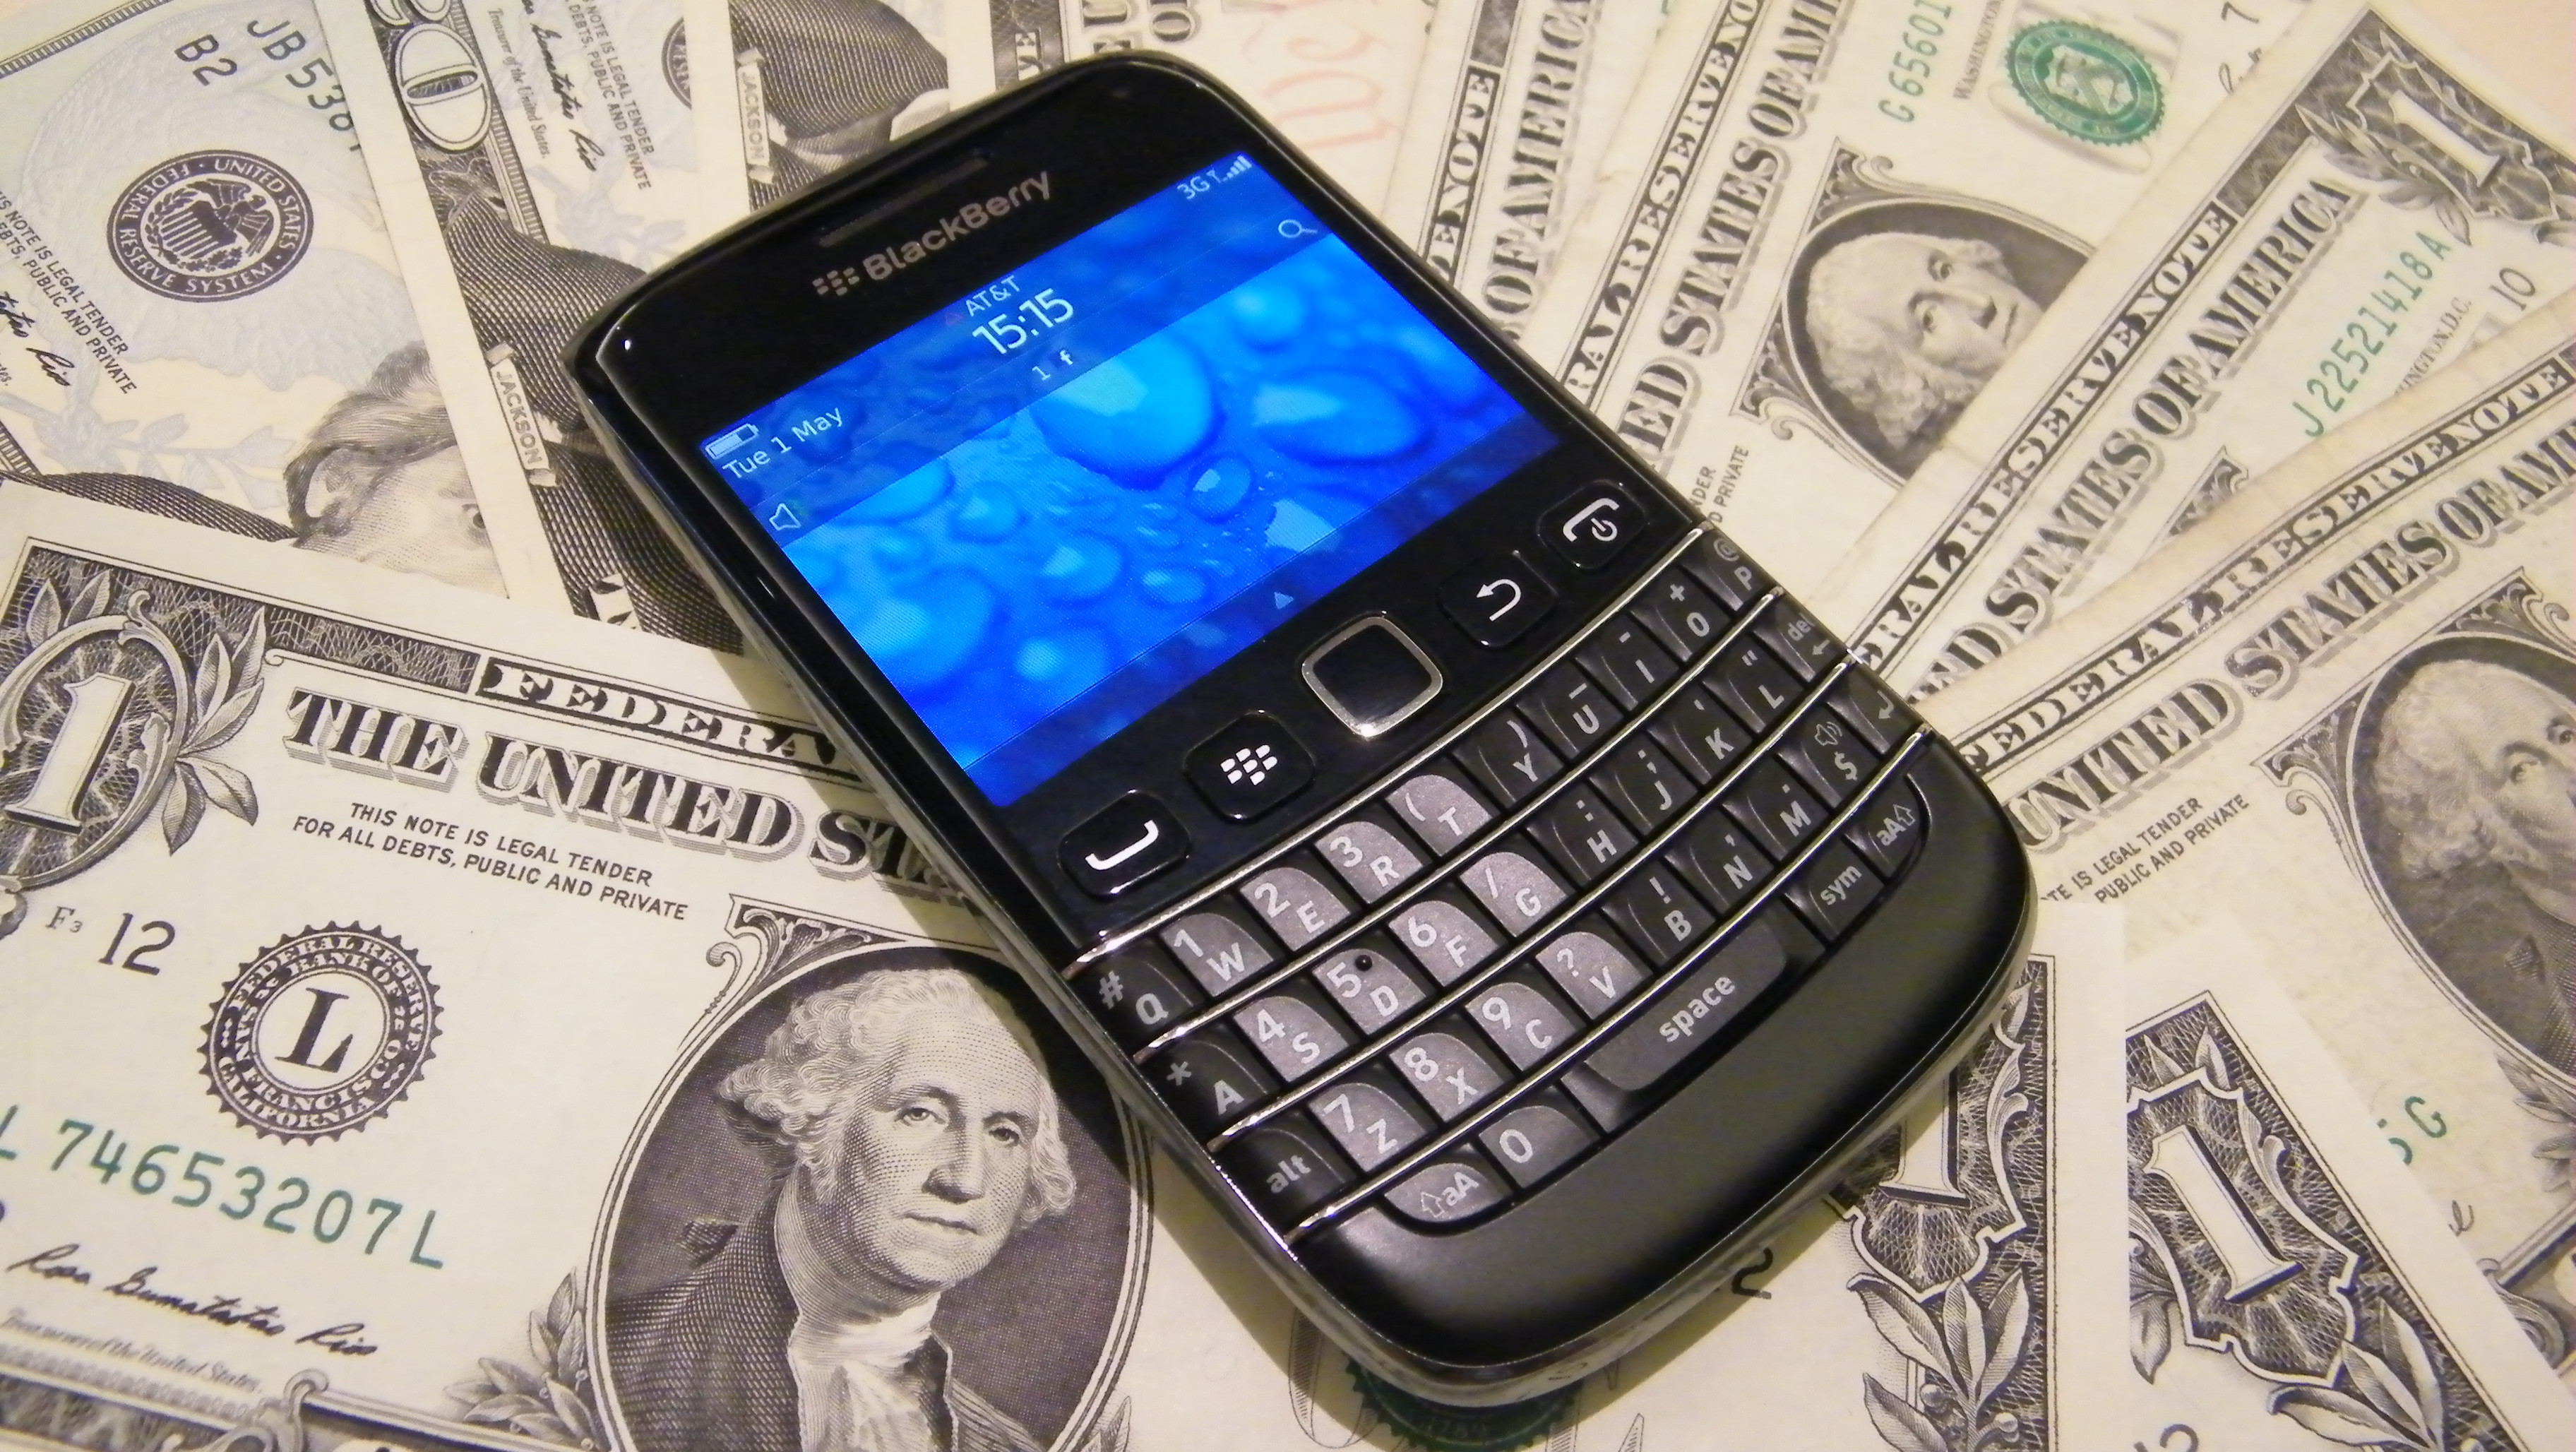 A BlackBerry phone lying on money